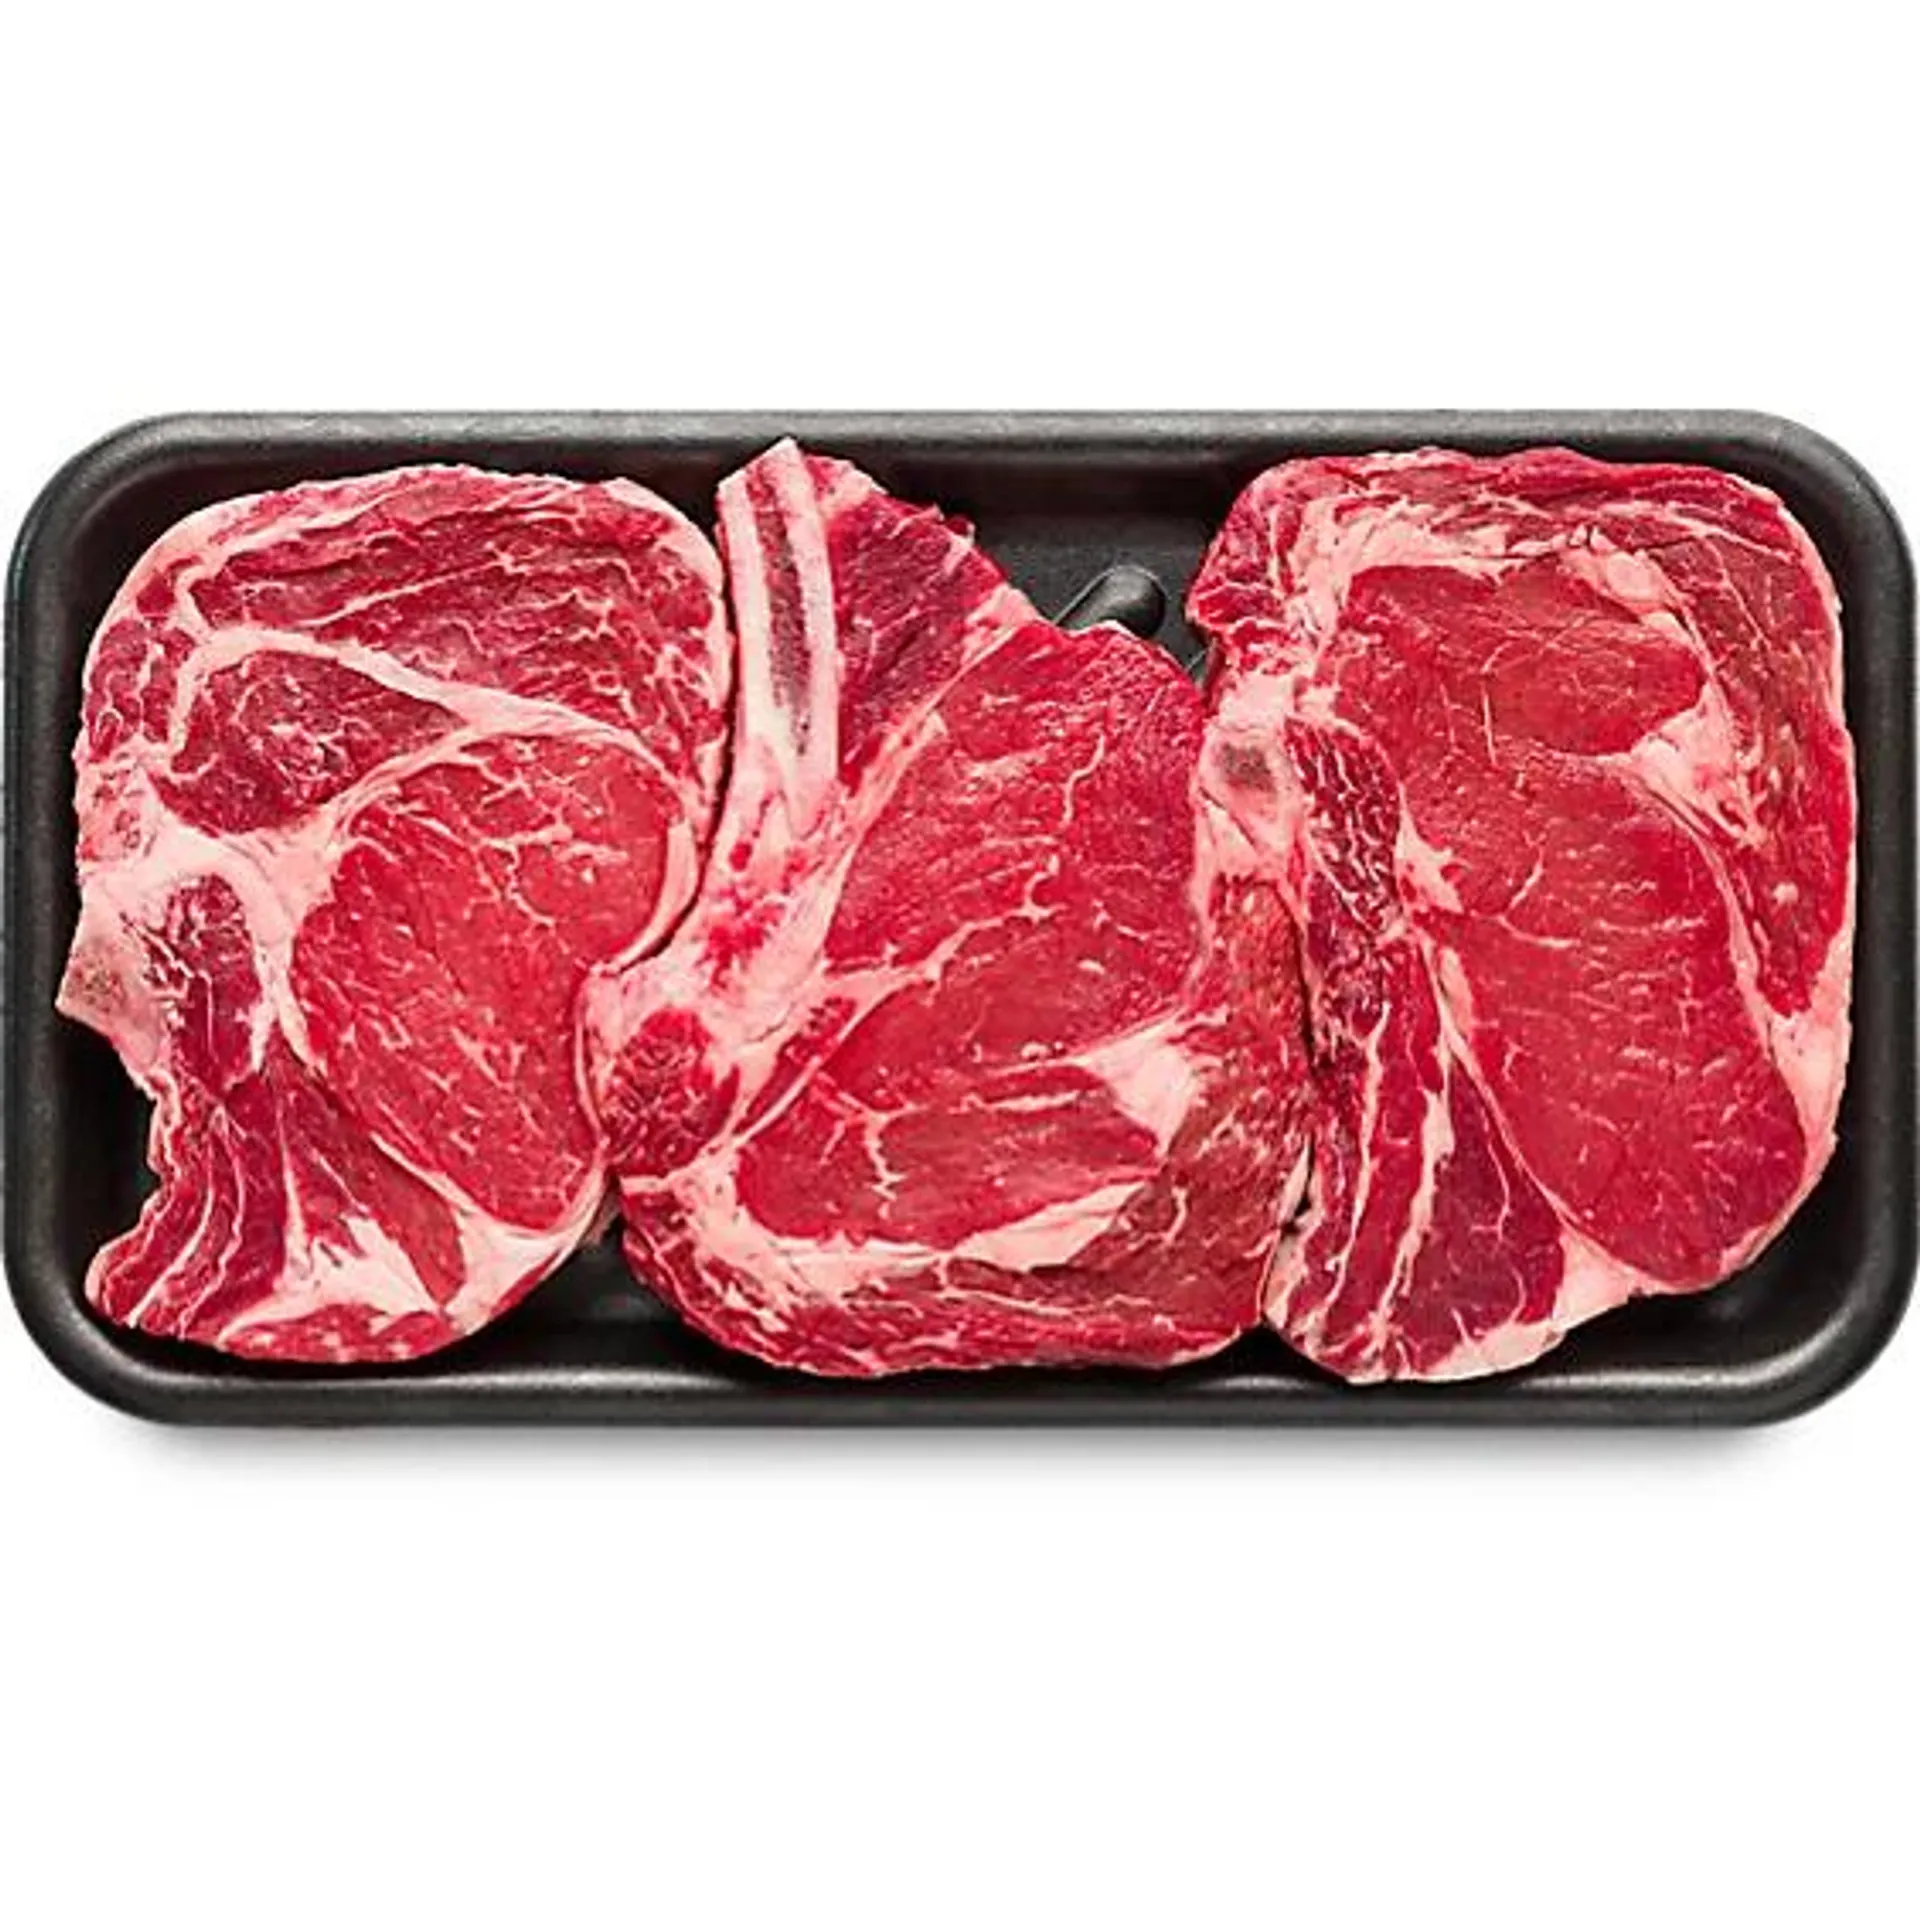 USDA Choice Beef Ribeye Bone I... Lbs.(approx. weight)